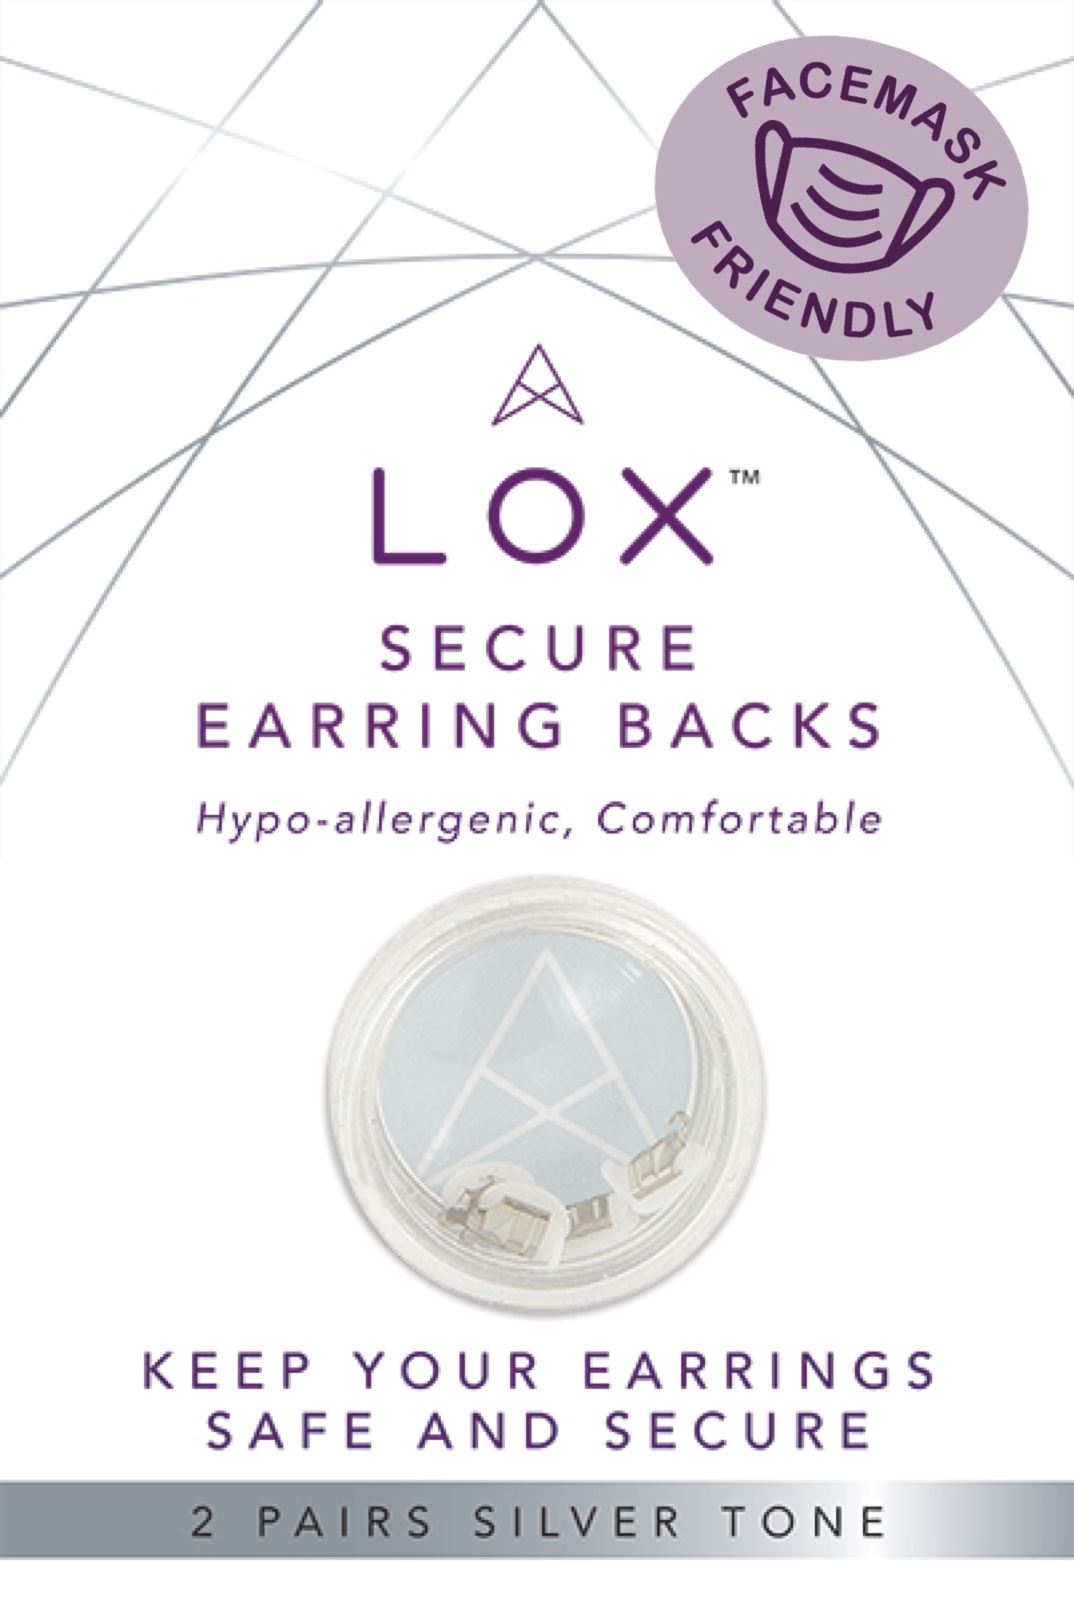 Why use secure, locking earring backs? - LOX